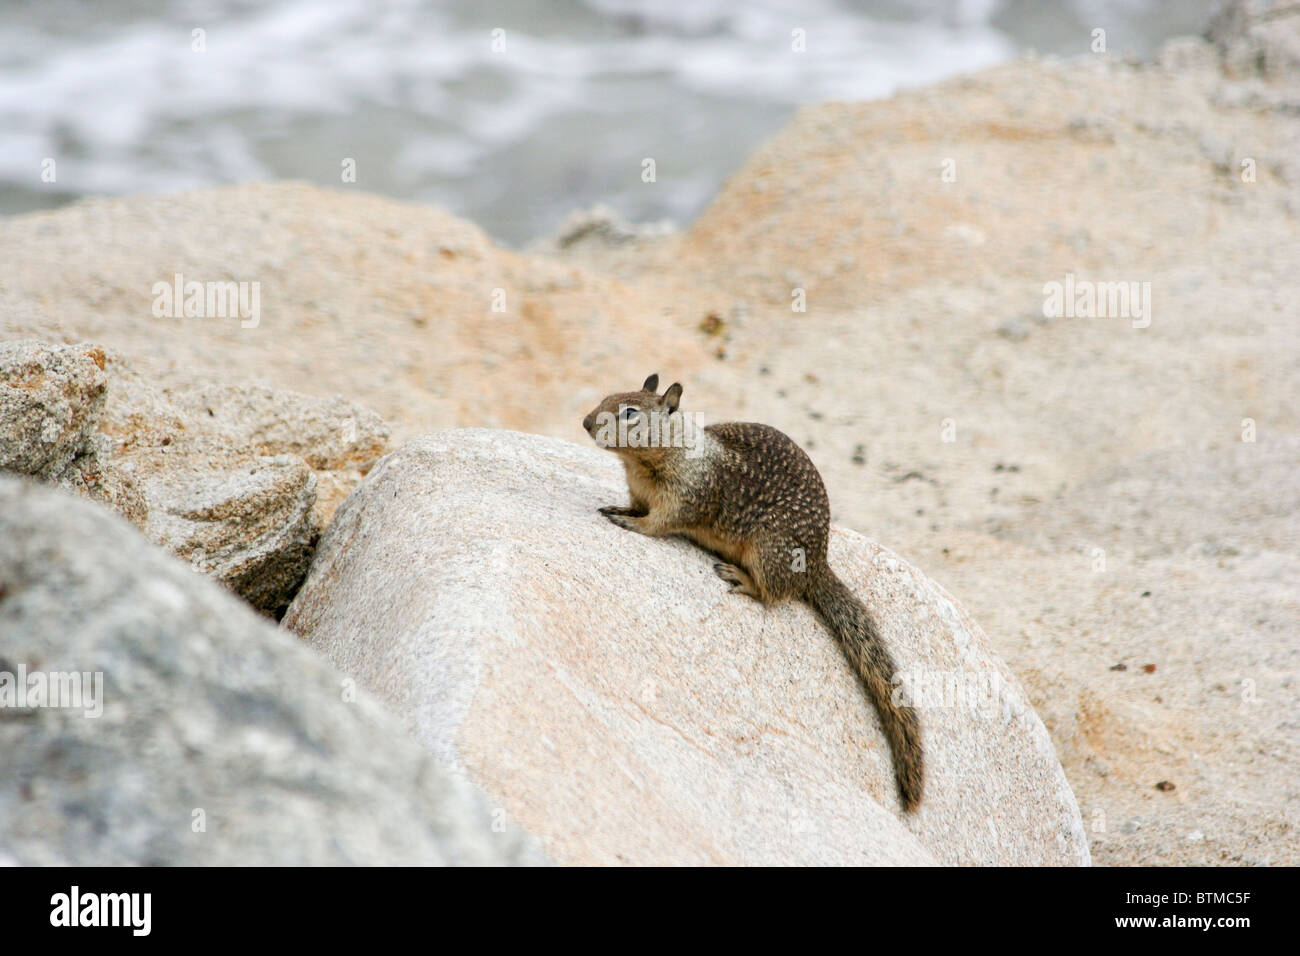 California ground squirrel (Otospermophilus beecheyi) on a rock Stock Photo